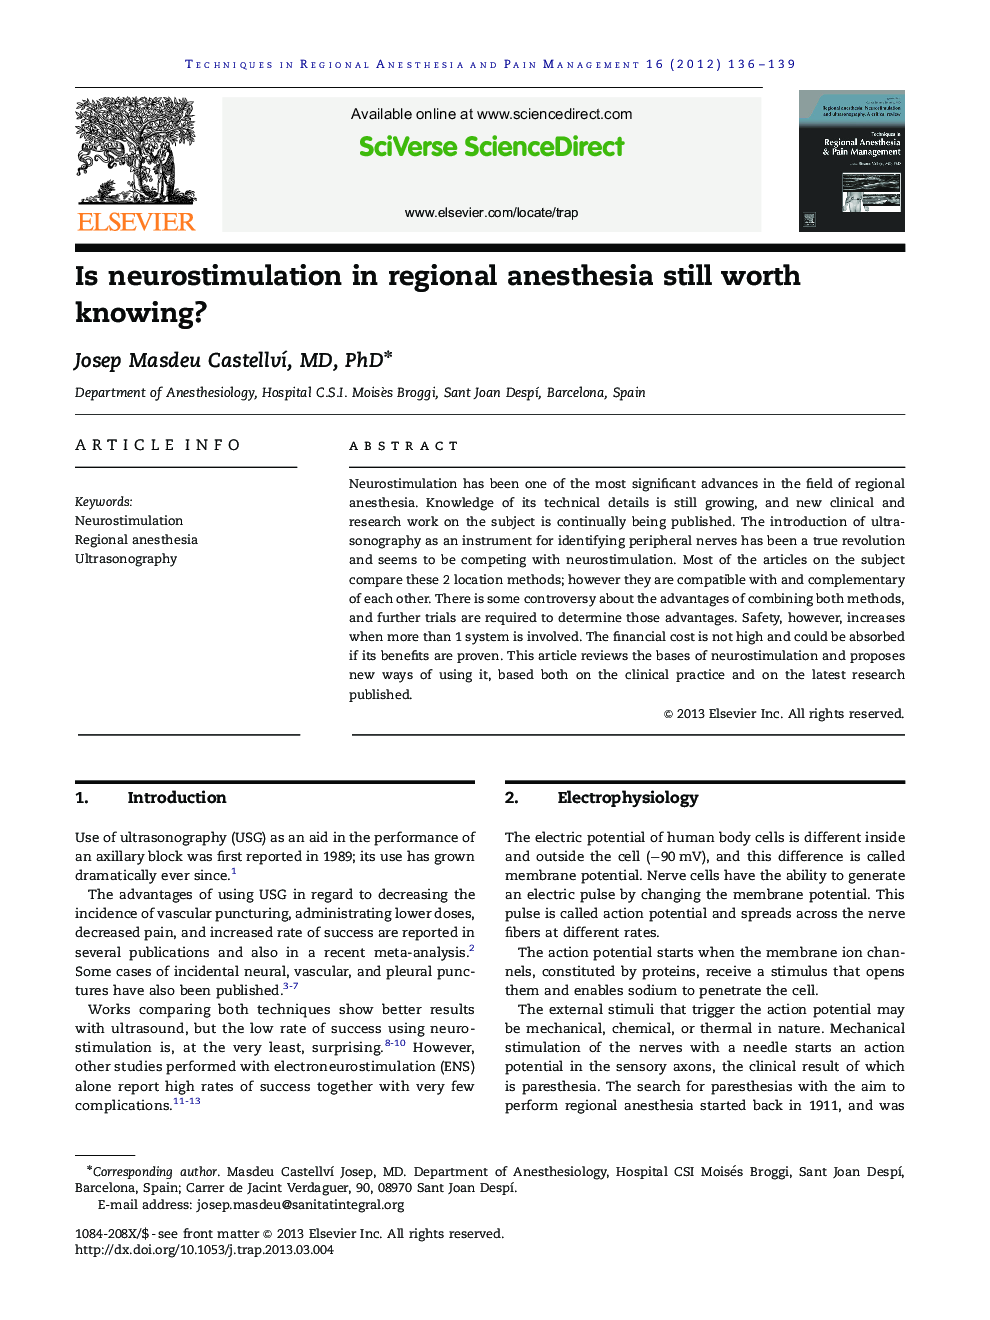 Is neurostimulation in regional anesthesia still worth knowing?